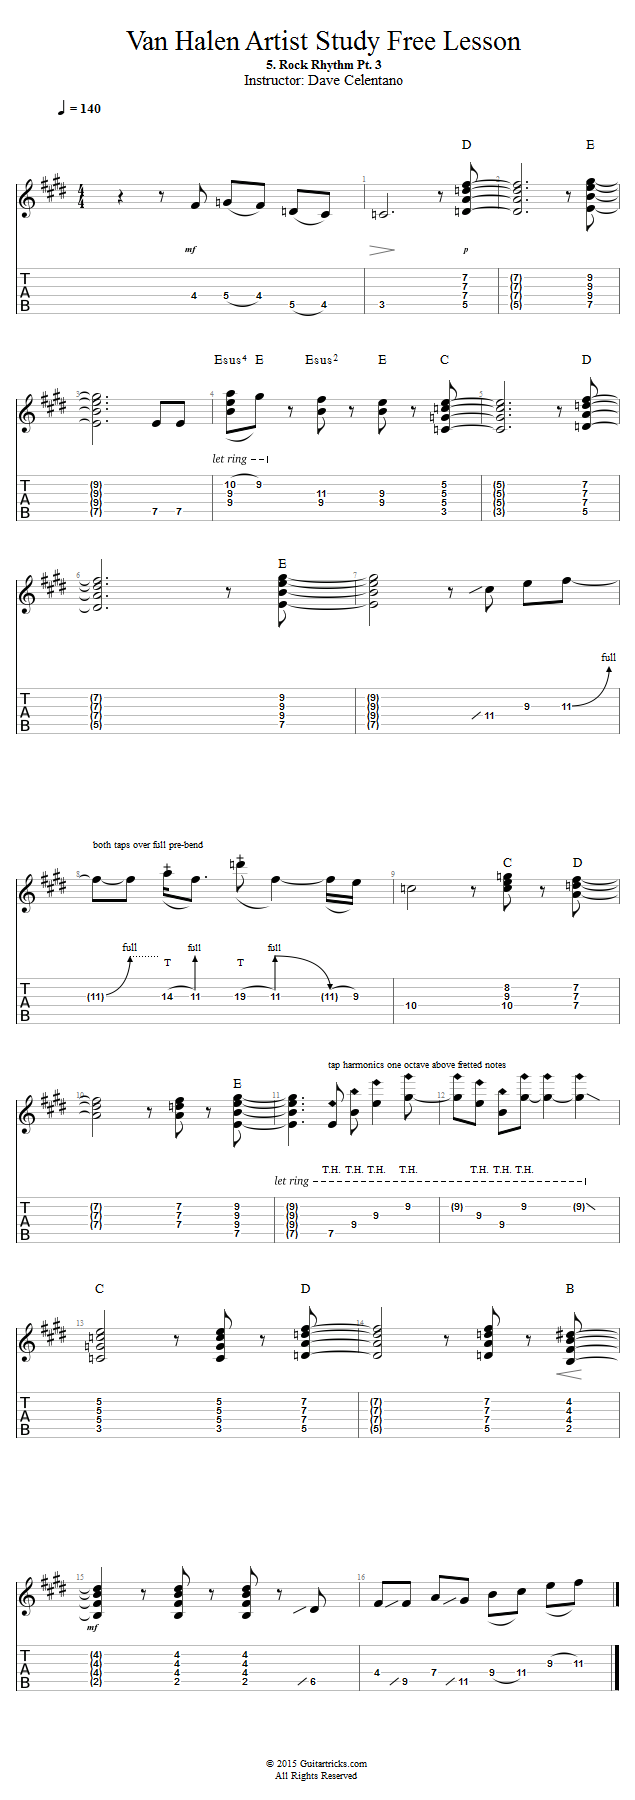 Rock Rhythm Pt. 3 song notation